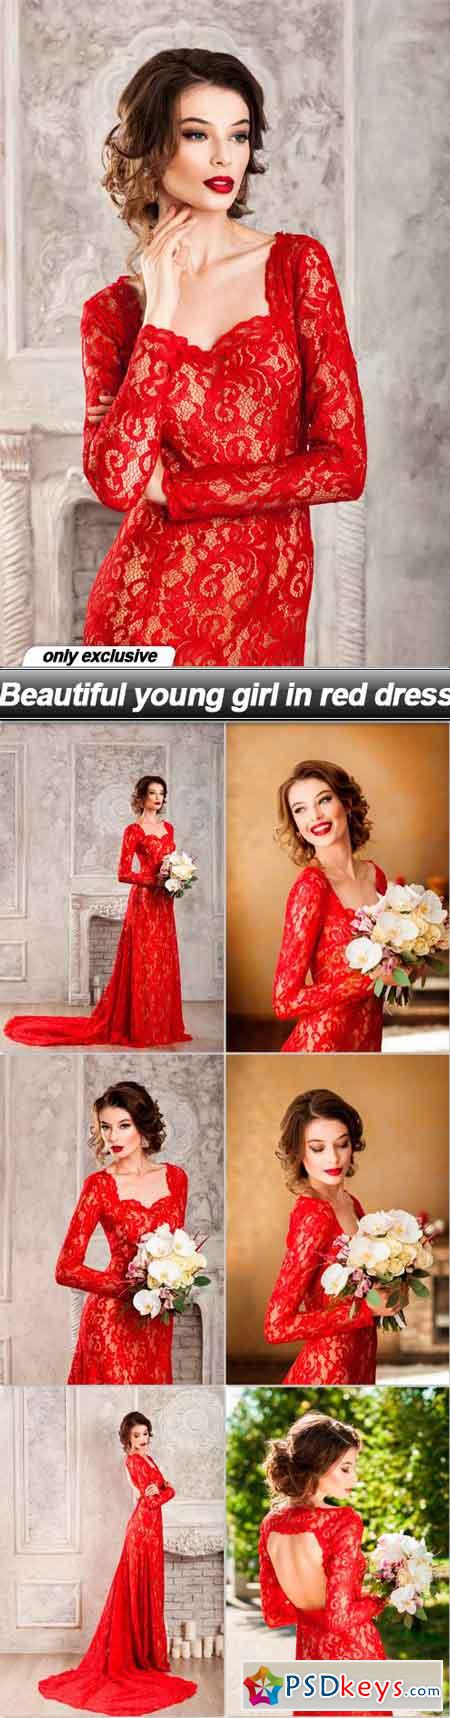 Beautiful young girl in red dress - 7 UHQ JPEG